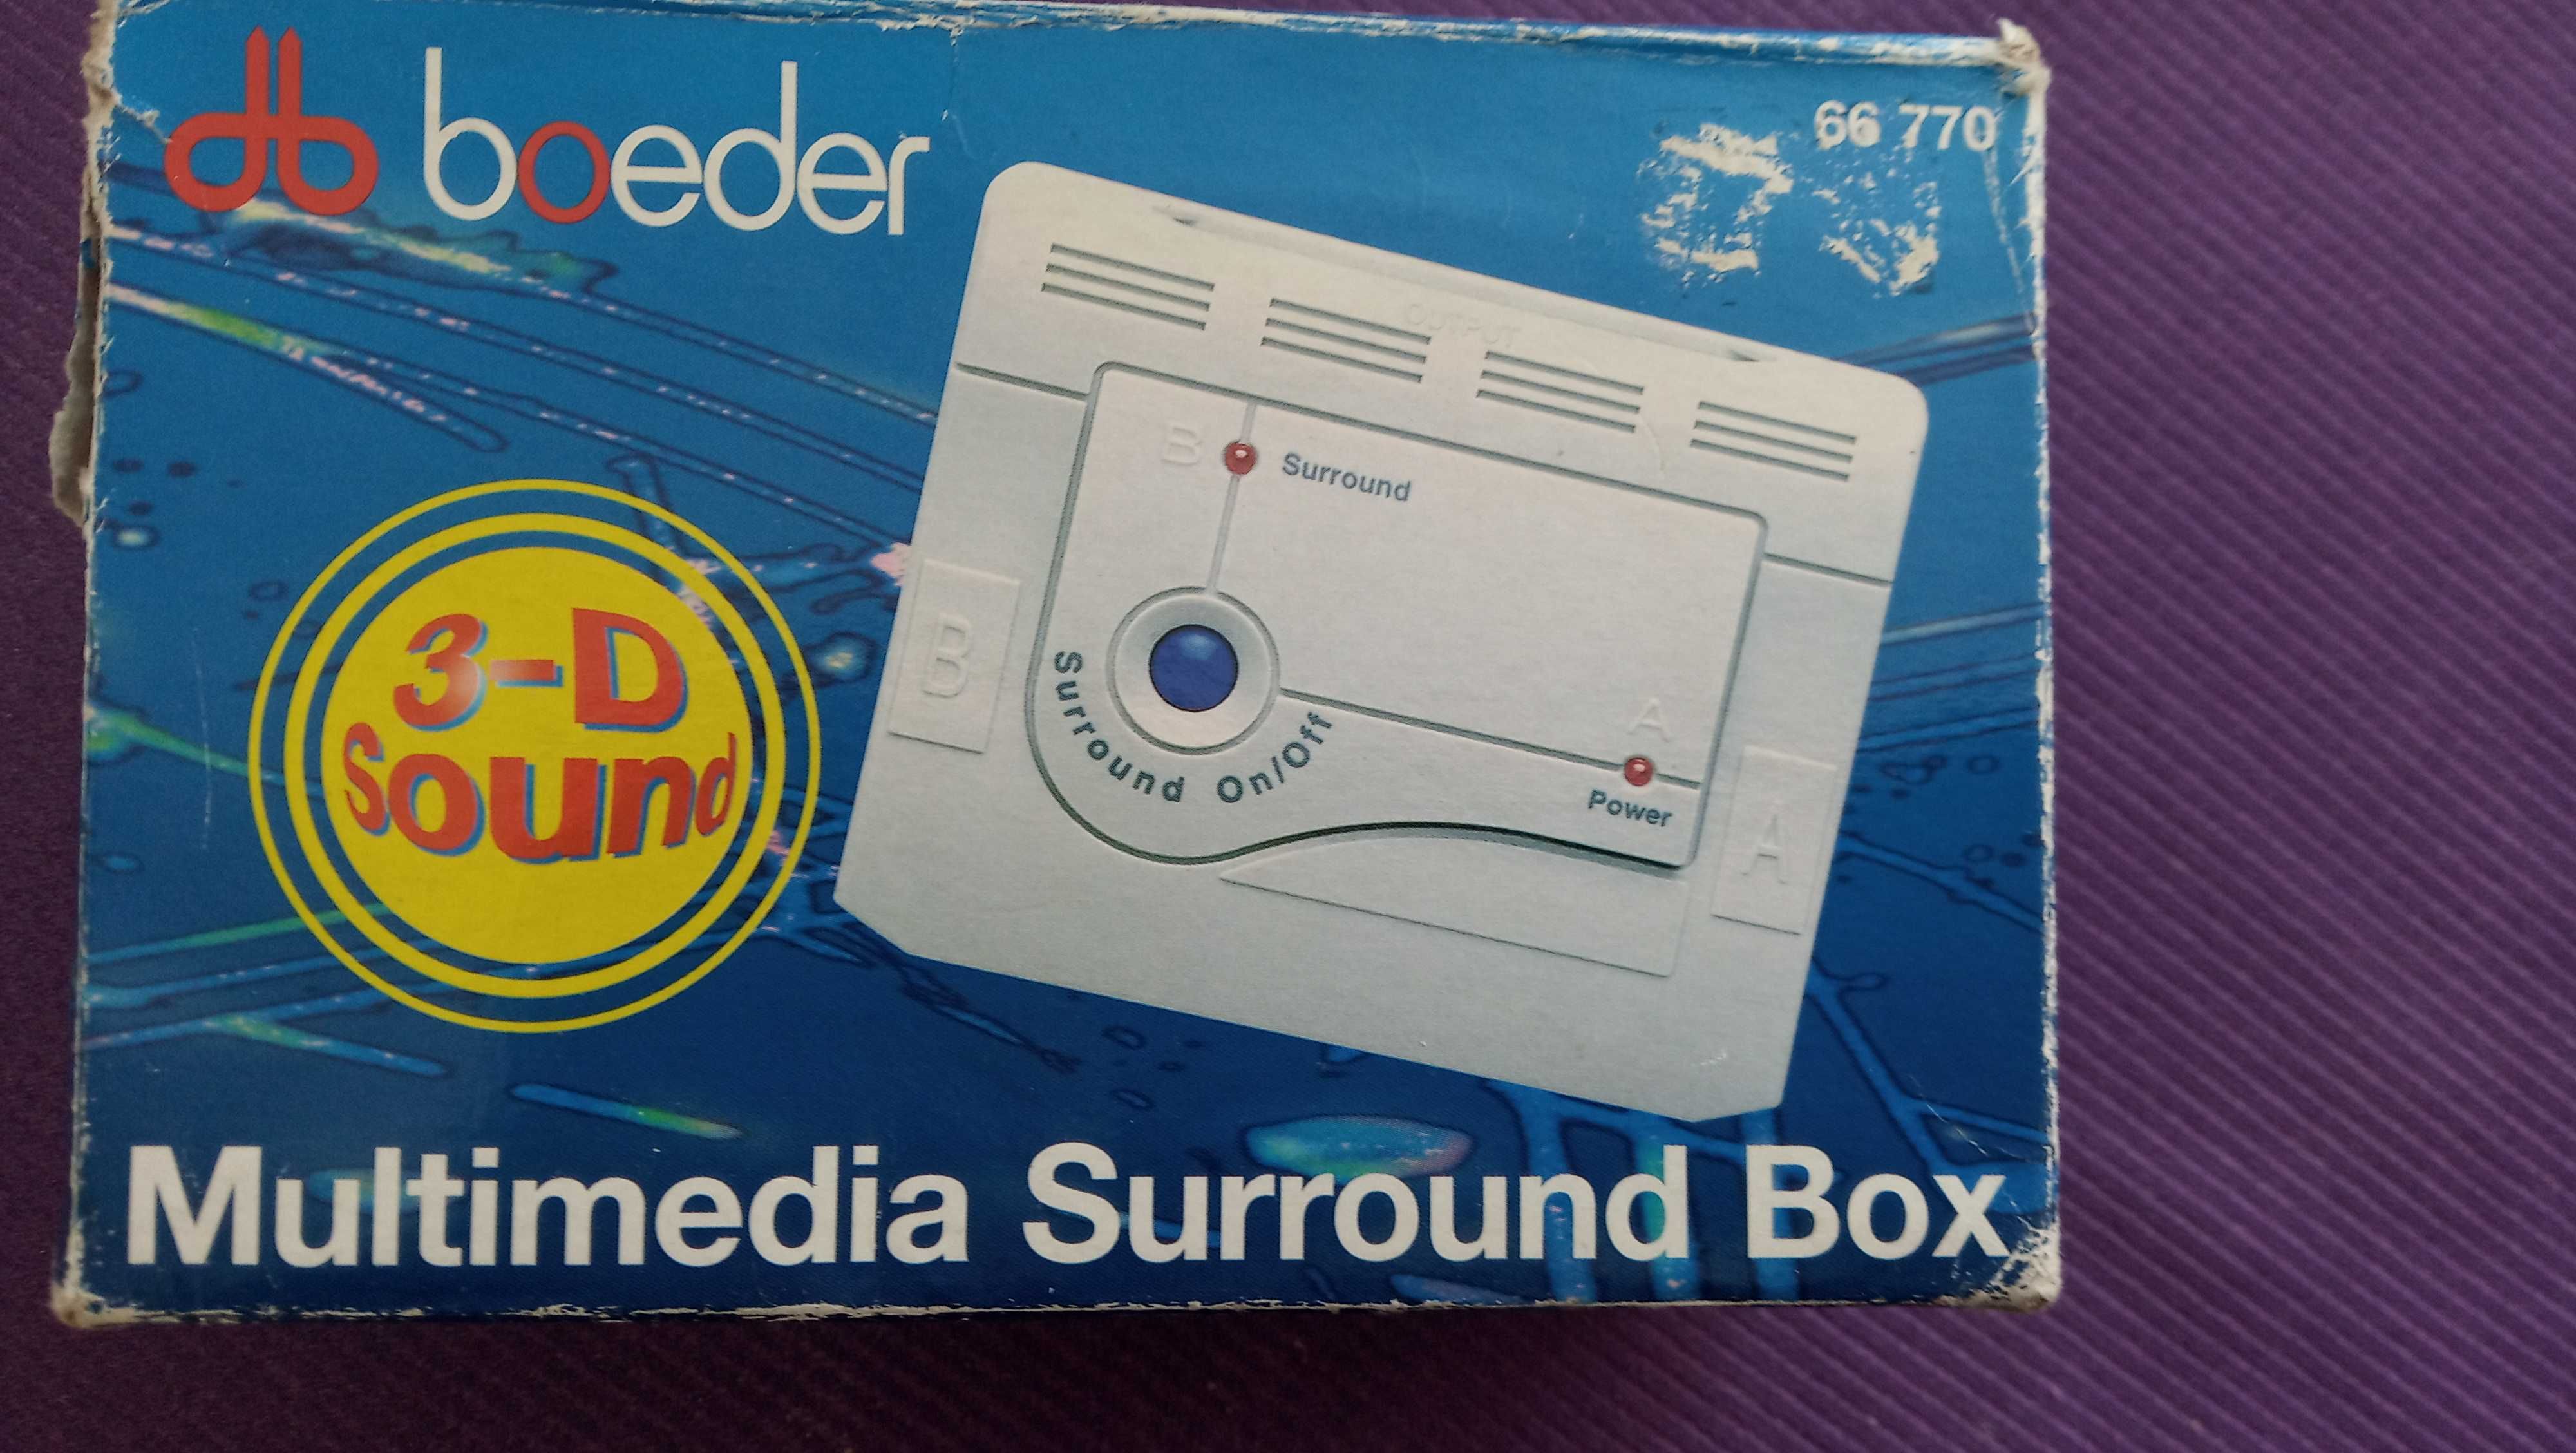 Multimedia Surround Box / 3-D Sound